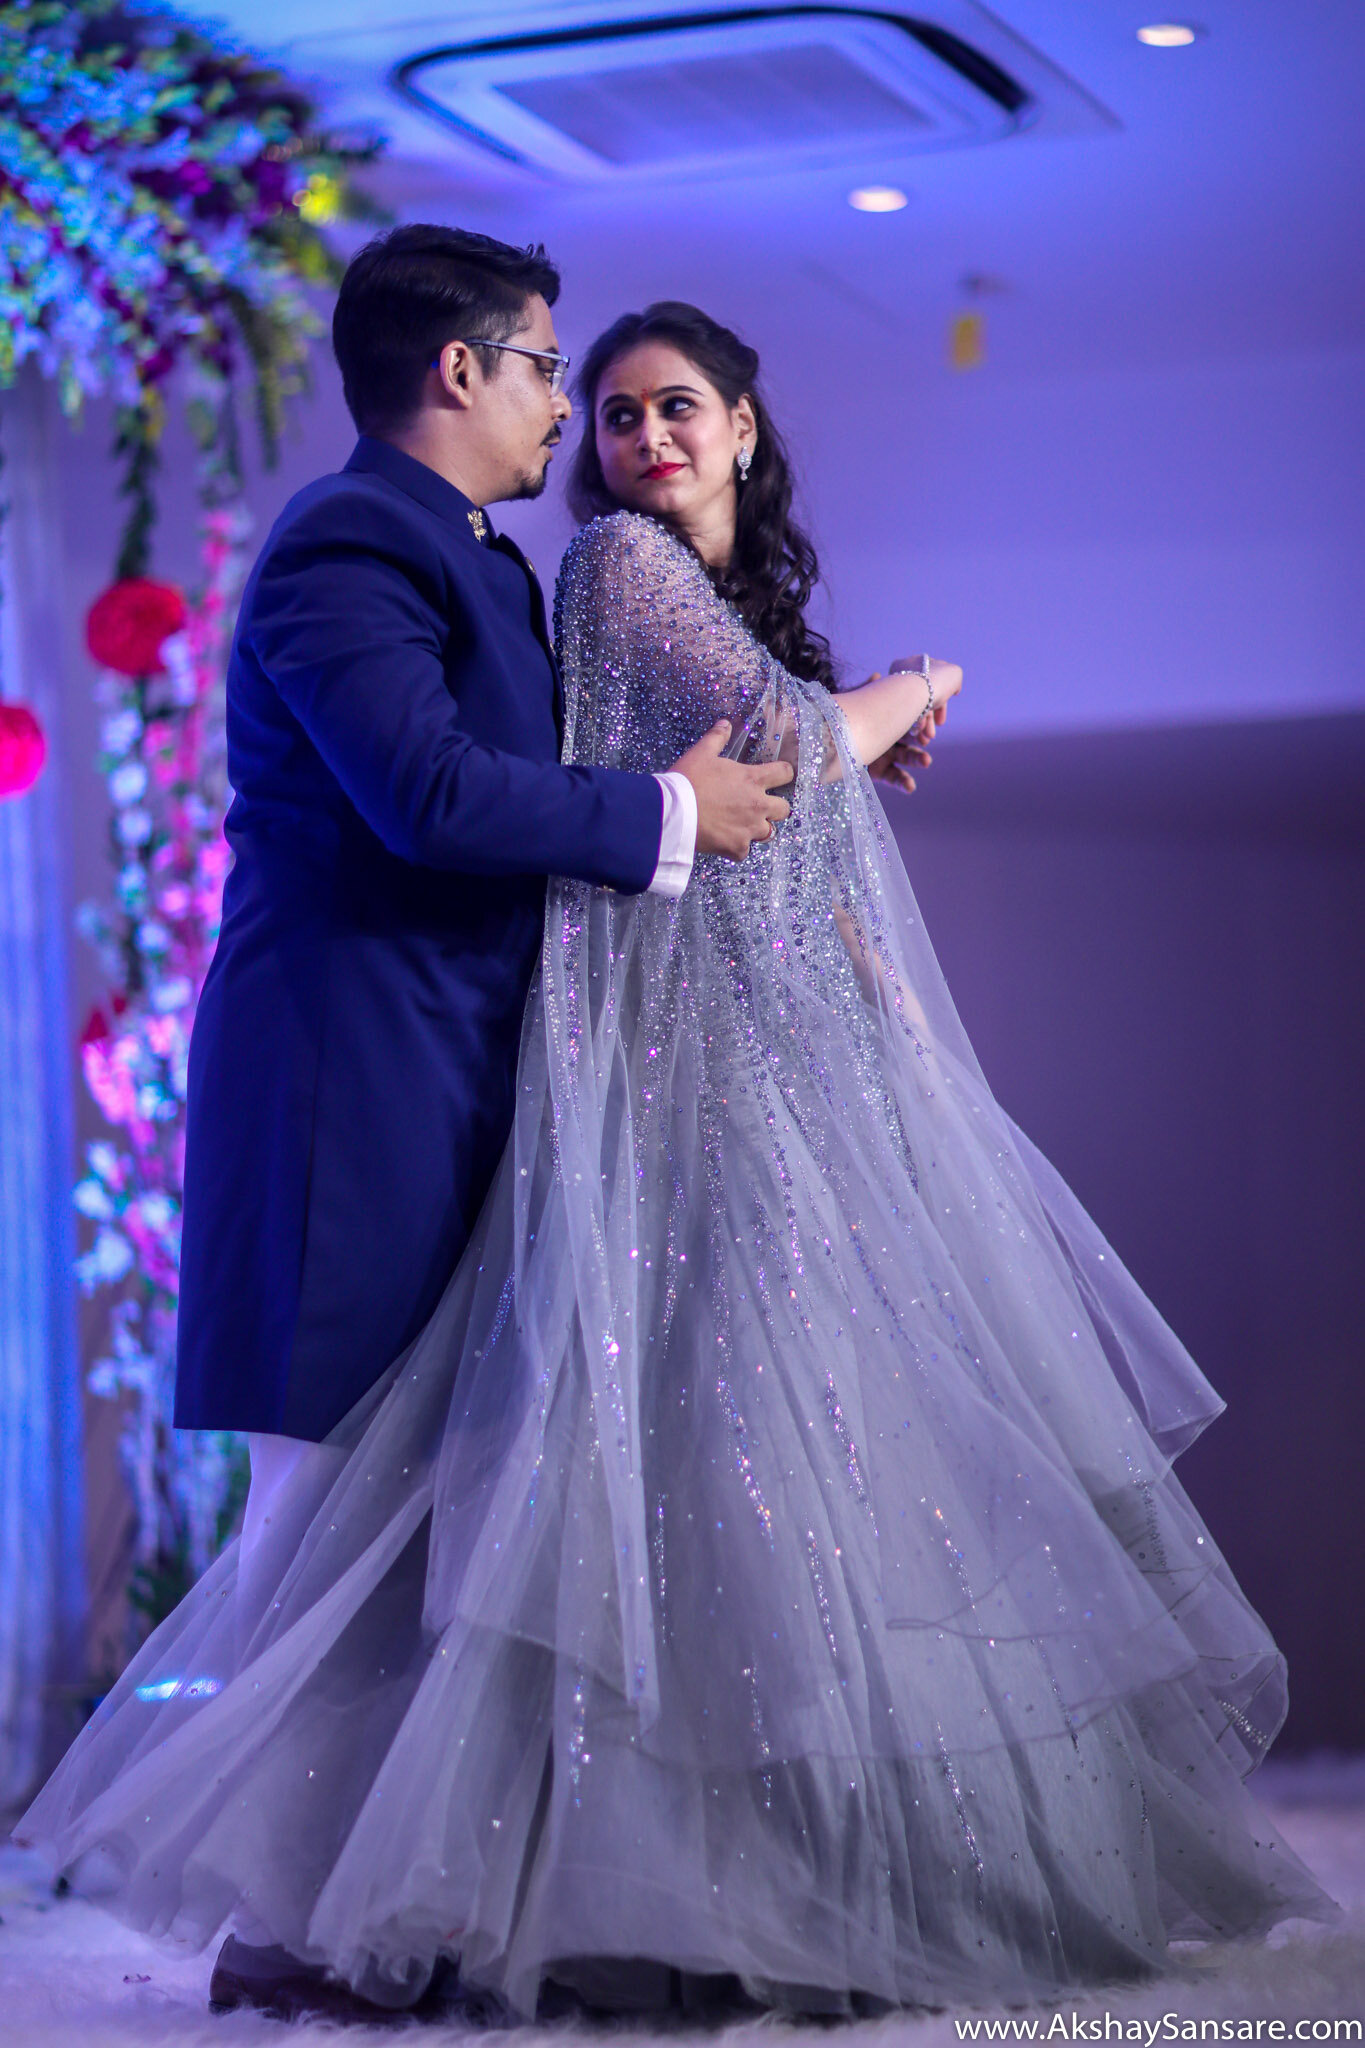 Rutu x Gaurang Engagement Akshay Sansare Photography Candid Photographer based in Mumbai best India Cinematic Wedding Films_-18.jpg